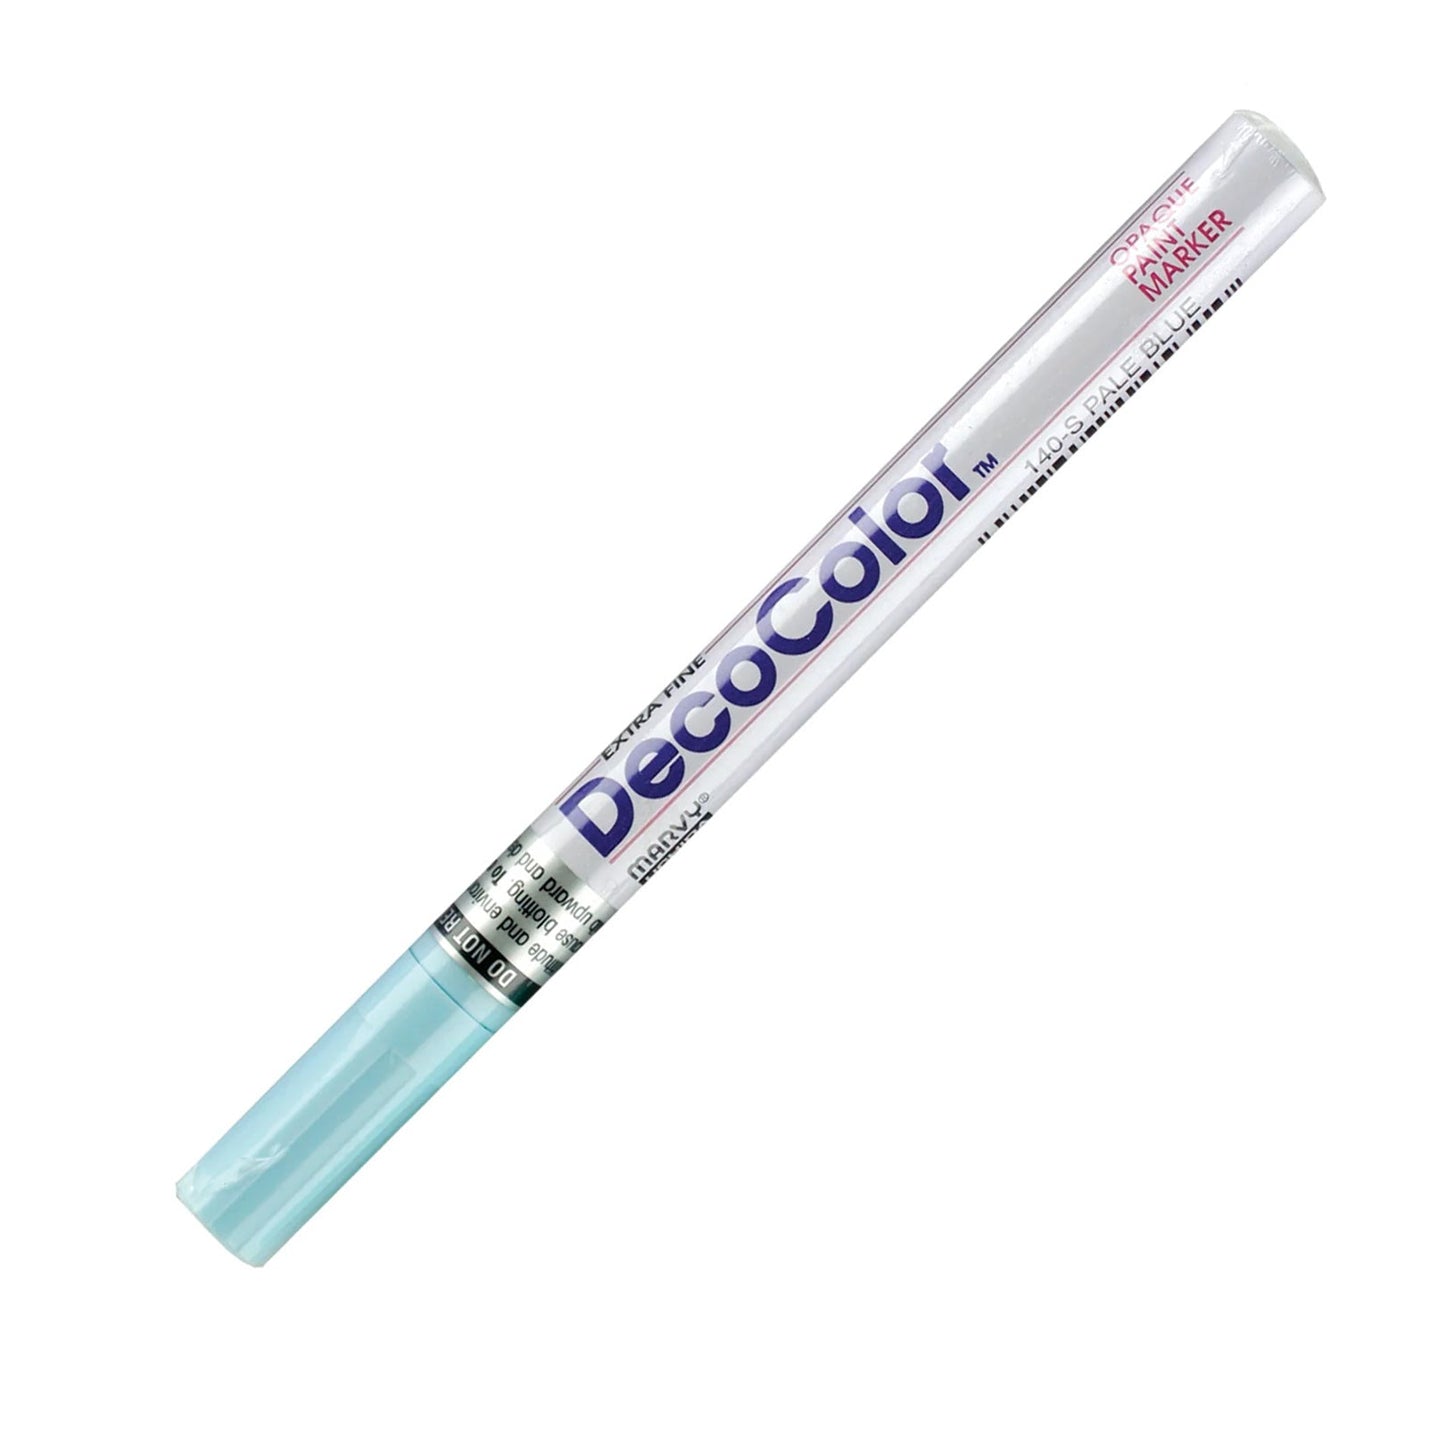 Decocolor Farbmarker, 0,8 mm extrafeine Specialtech-Spitze